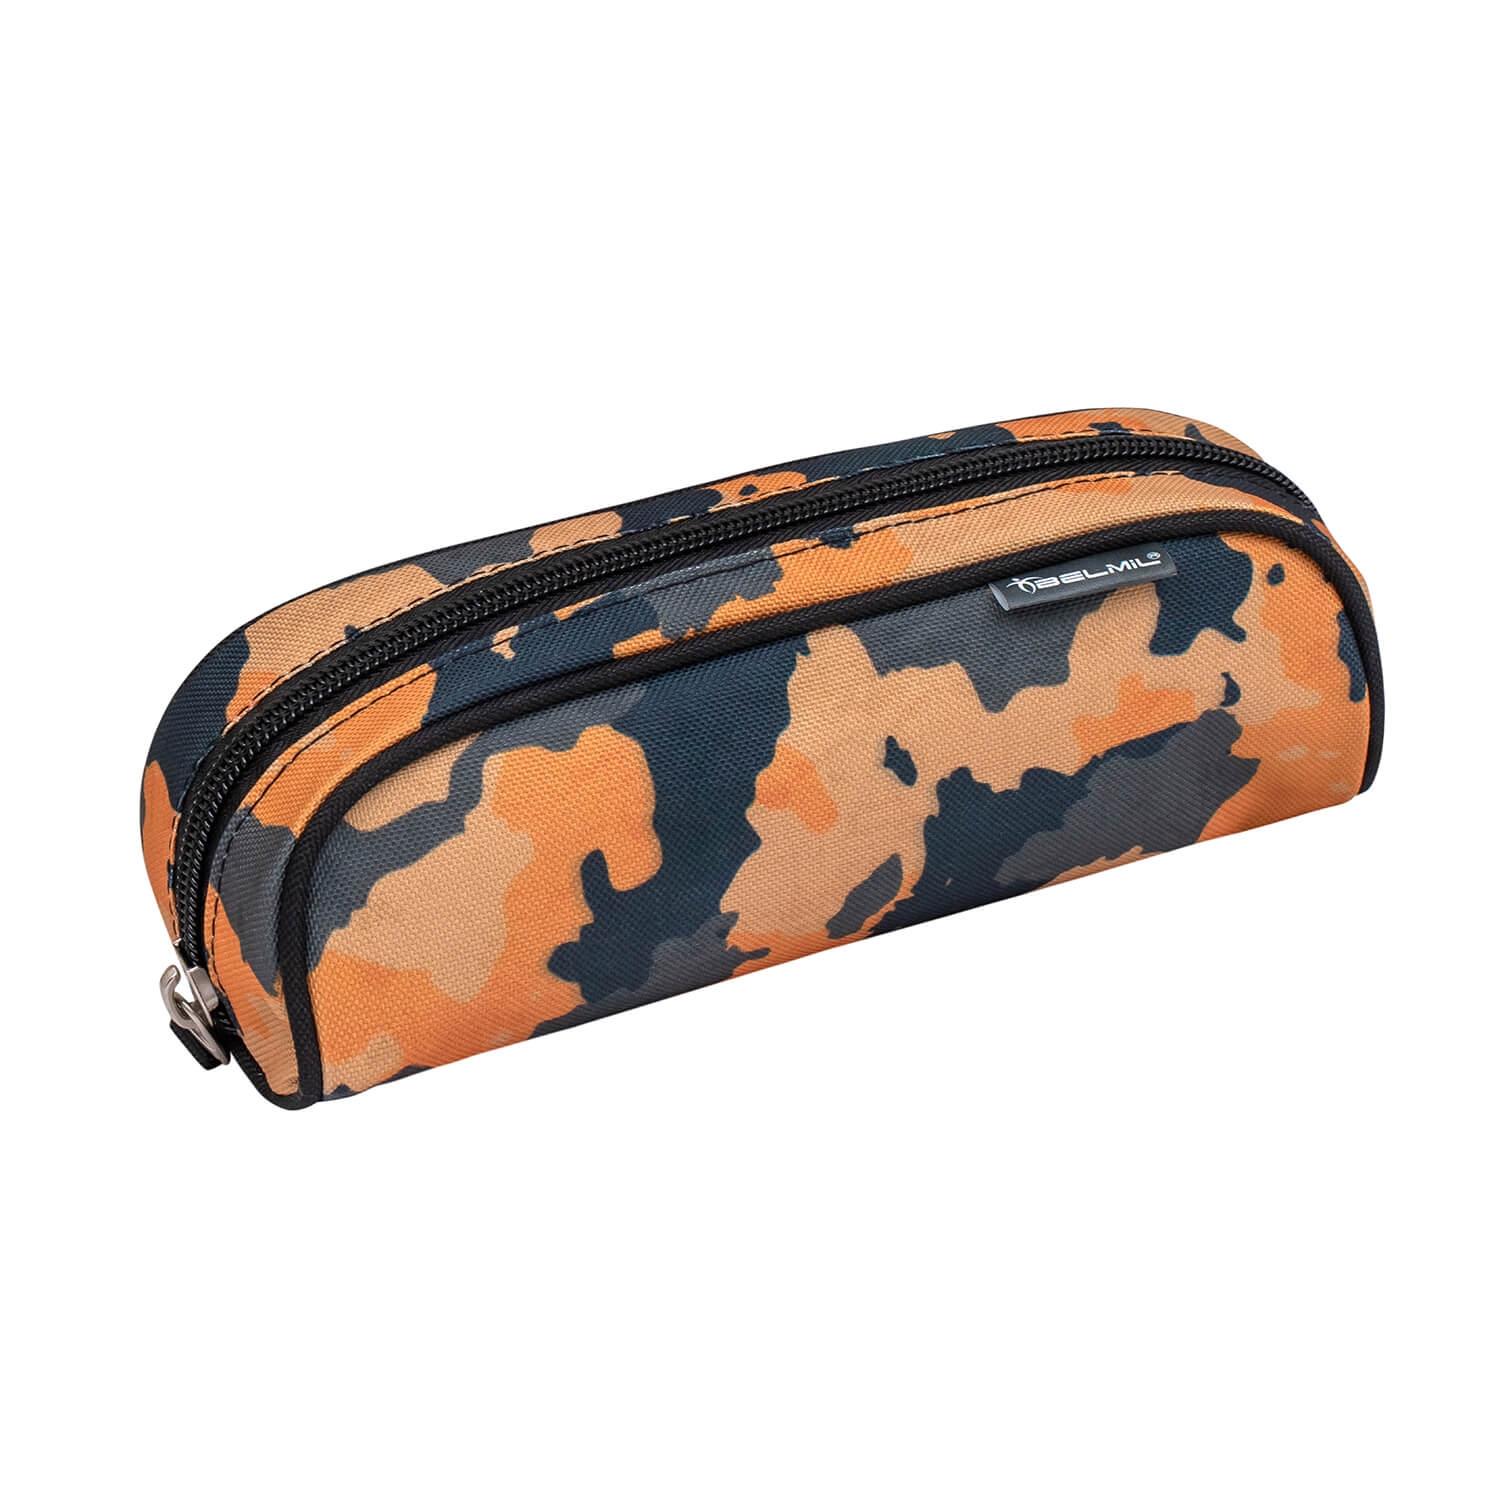 Motion Orange Camouflage schoolbag set 5 pcs